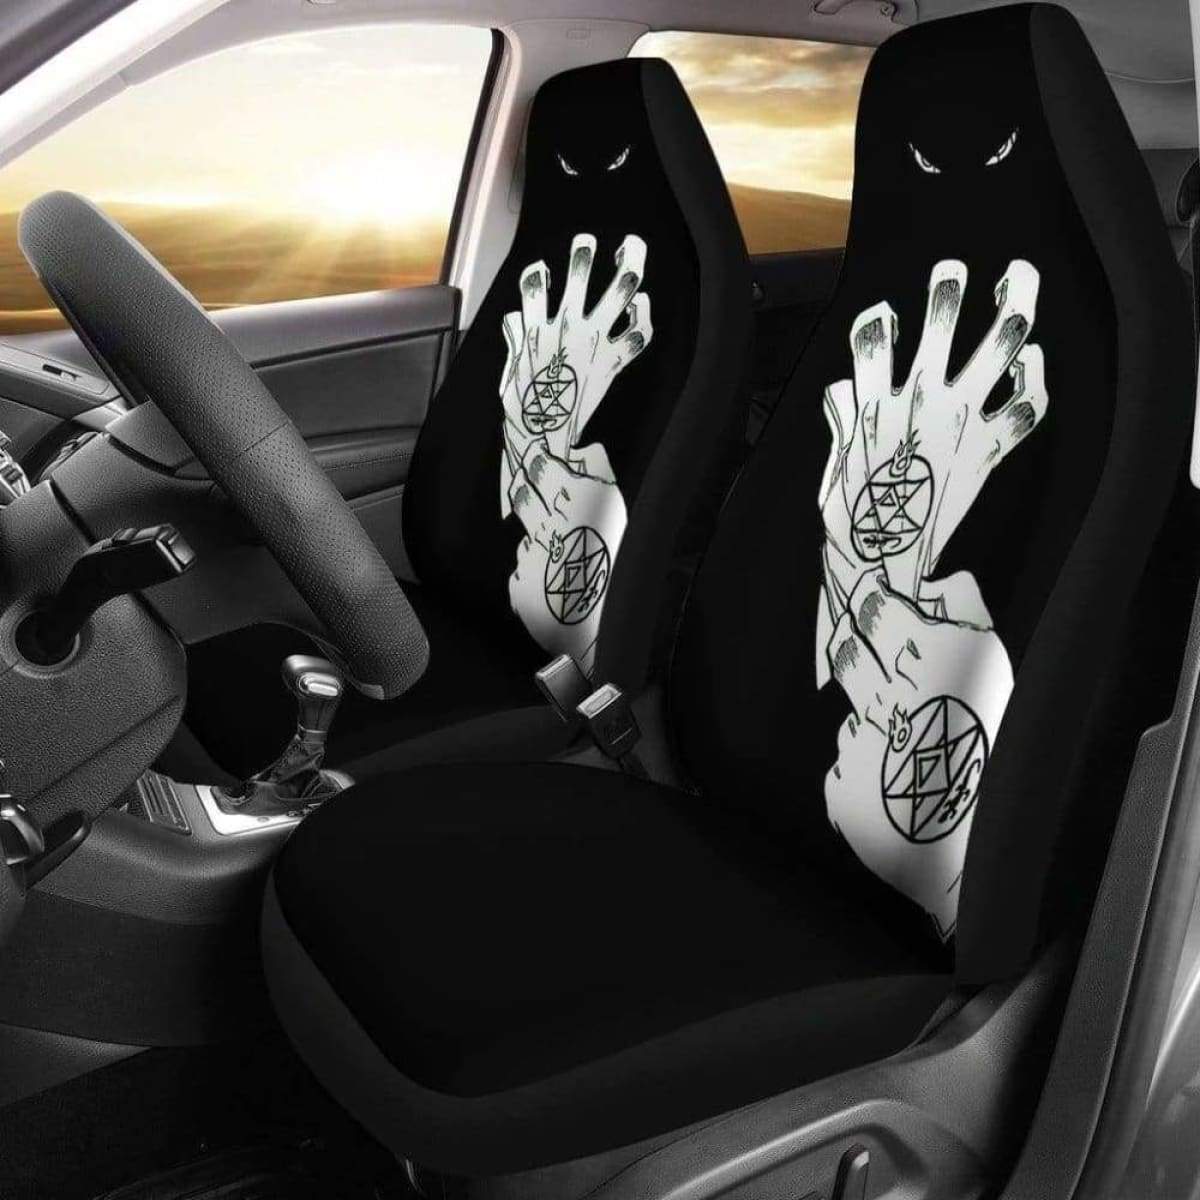 Hellsing Ova Car Seat Covers 2 Universal Fit